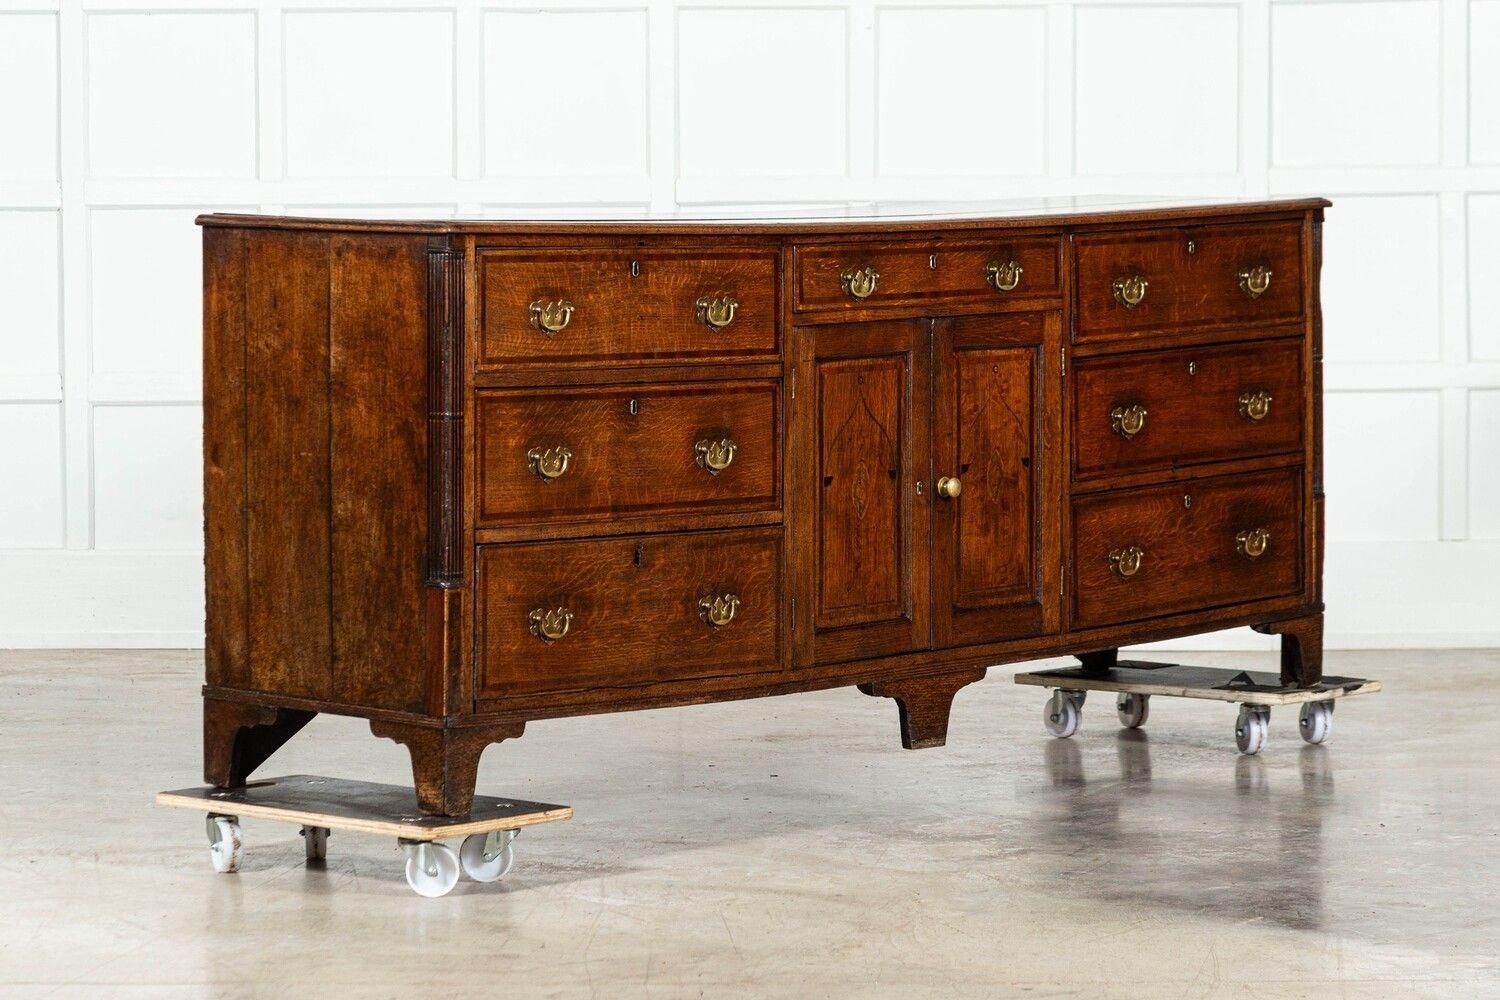 circa 1790
Large English George III Oak Inlaid Dresser Base
sku 1764
W216 x D51 x H85 cm.
Weight 90 Kg